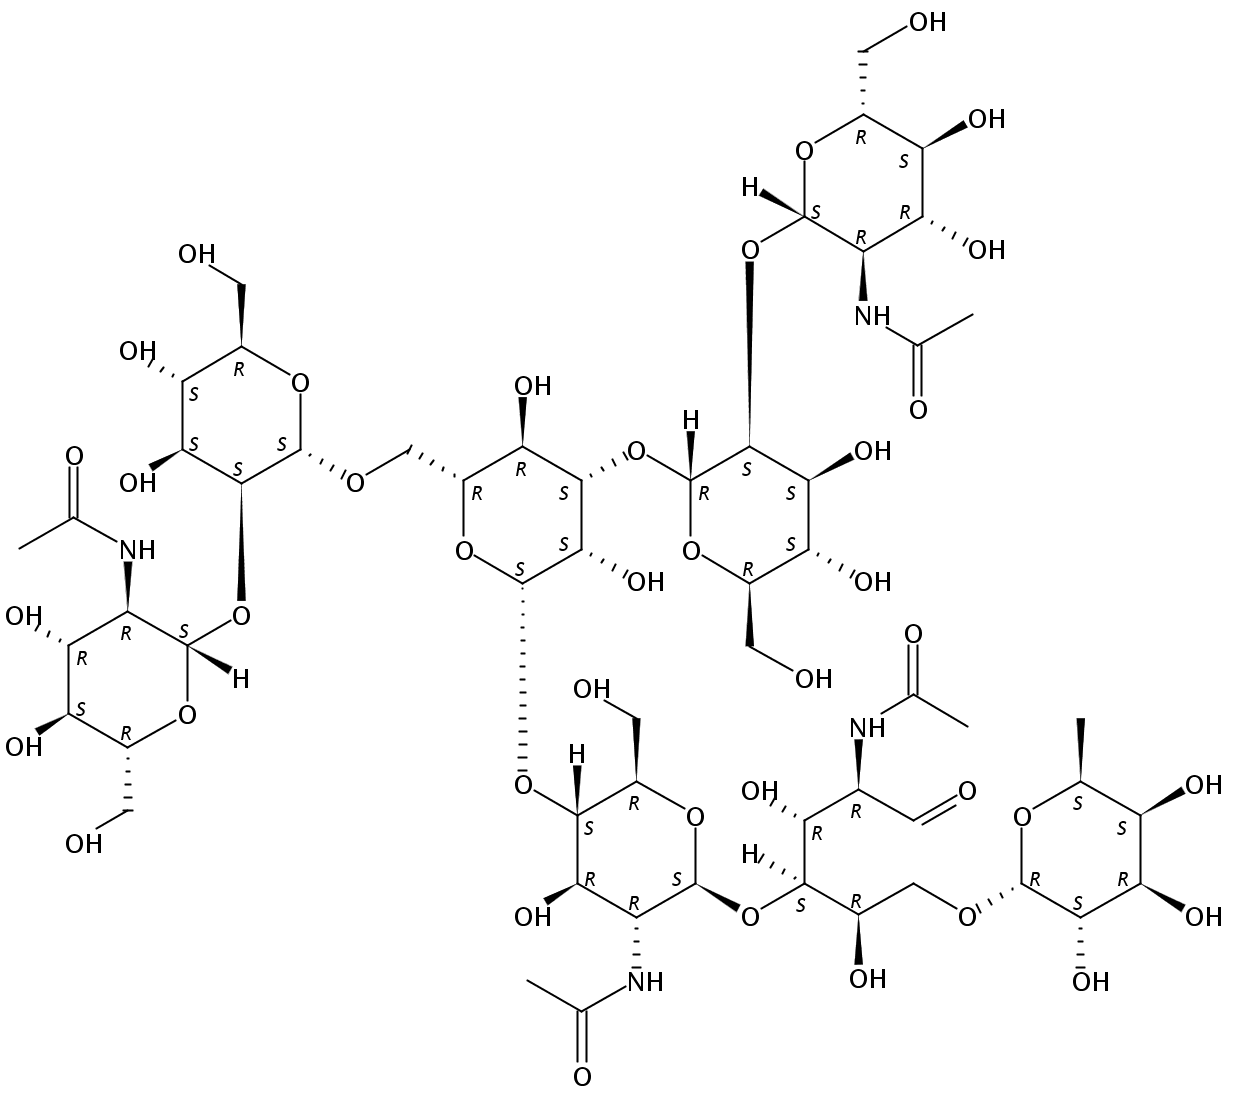 Asialo, agalacto, biantennary fucosylated (NGA2F)